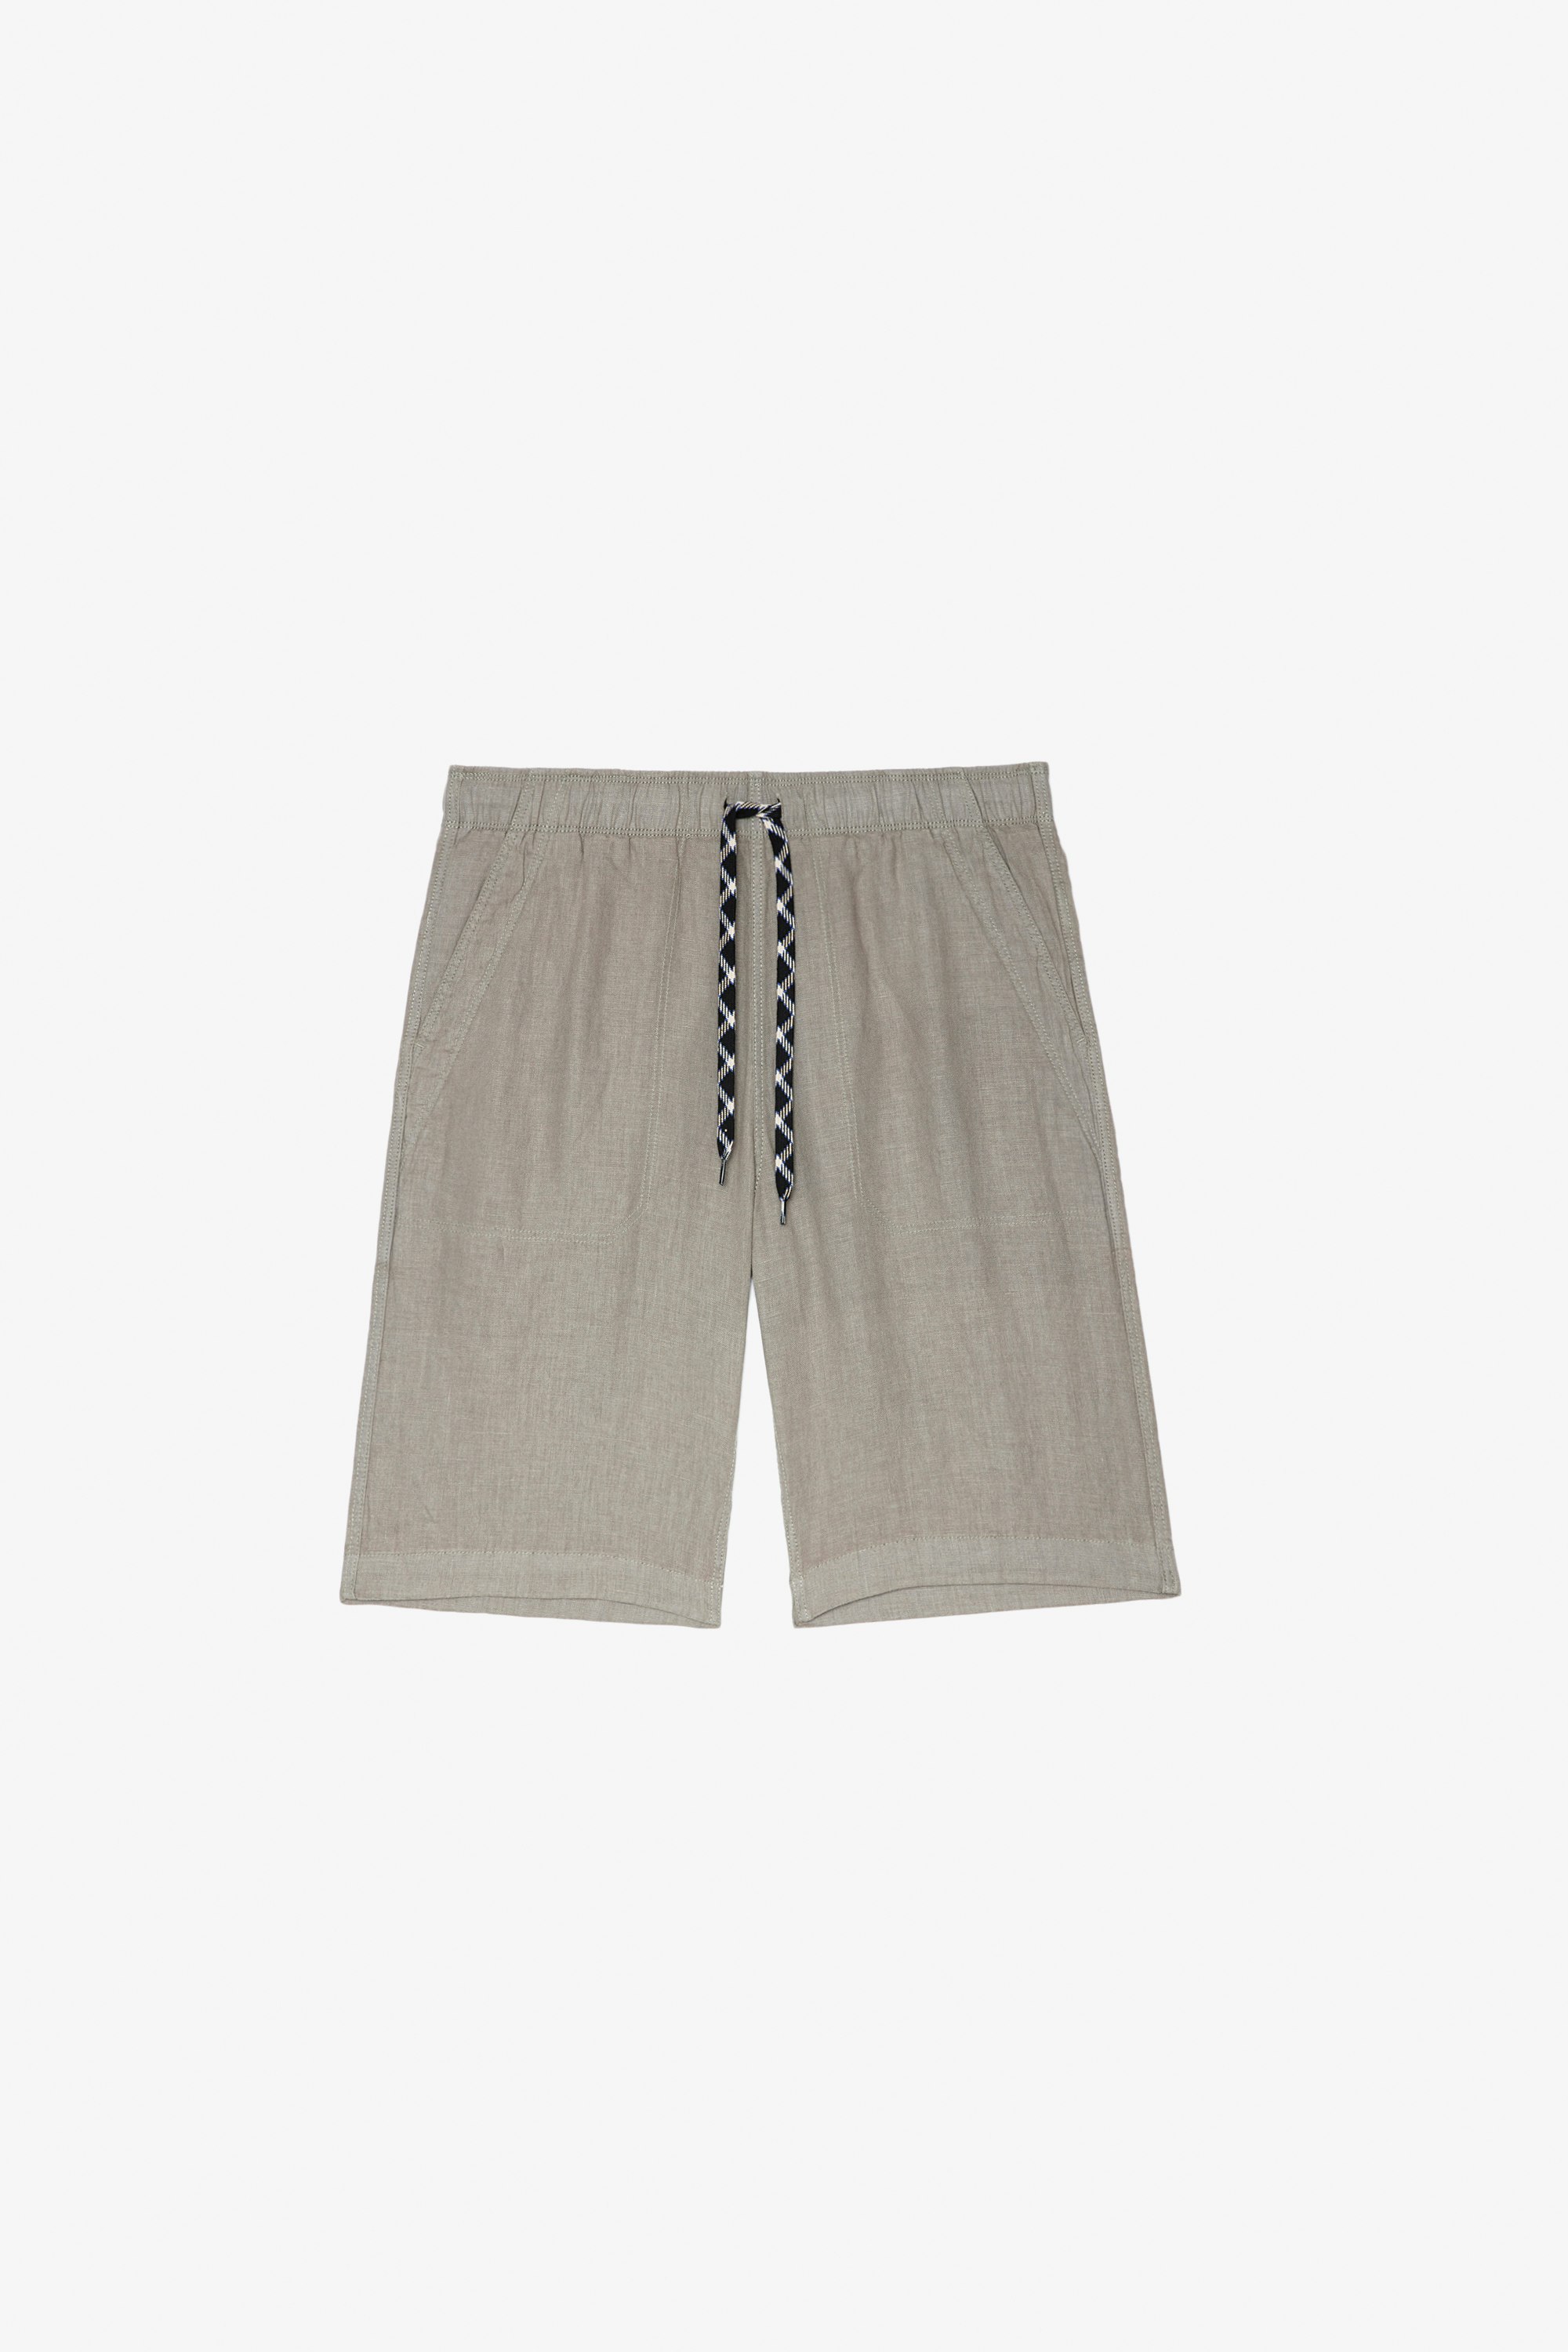 Pixels Shorts Men's khaki linen shorts with multiple pockets